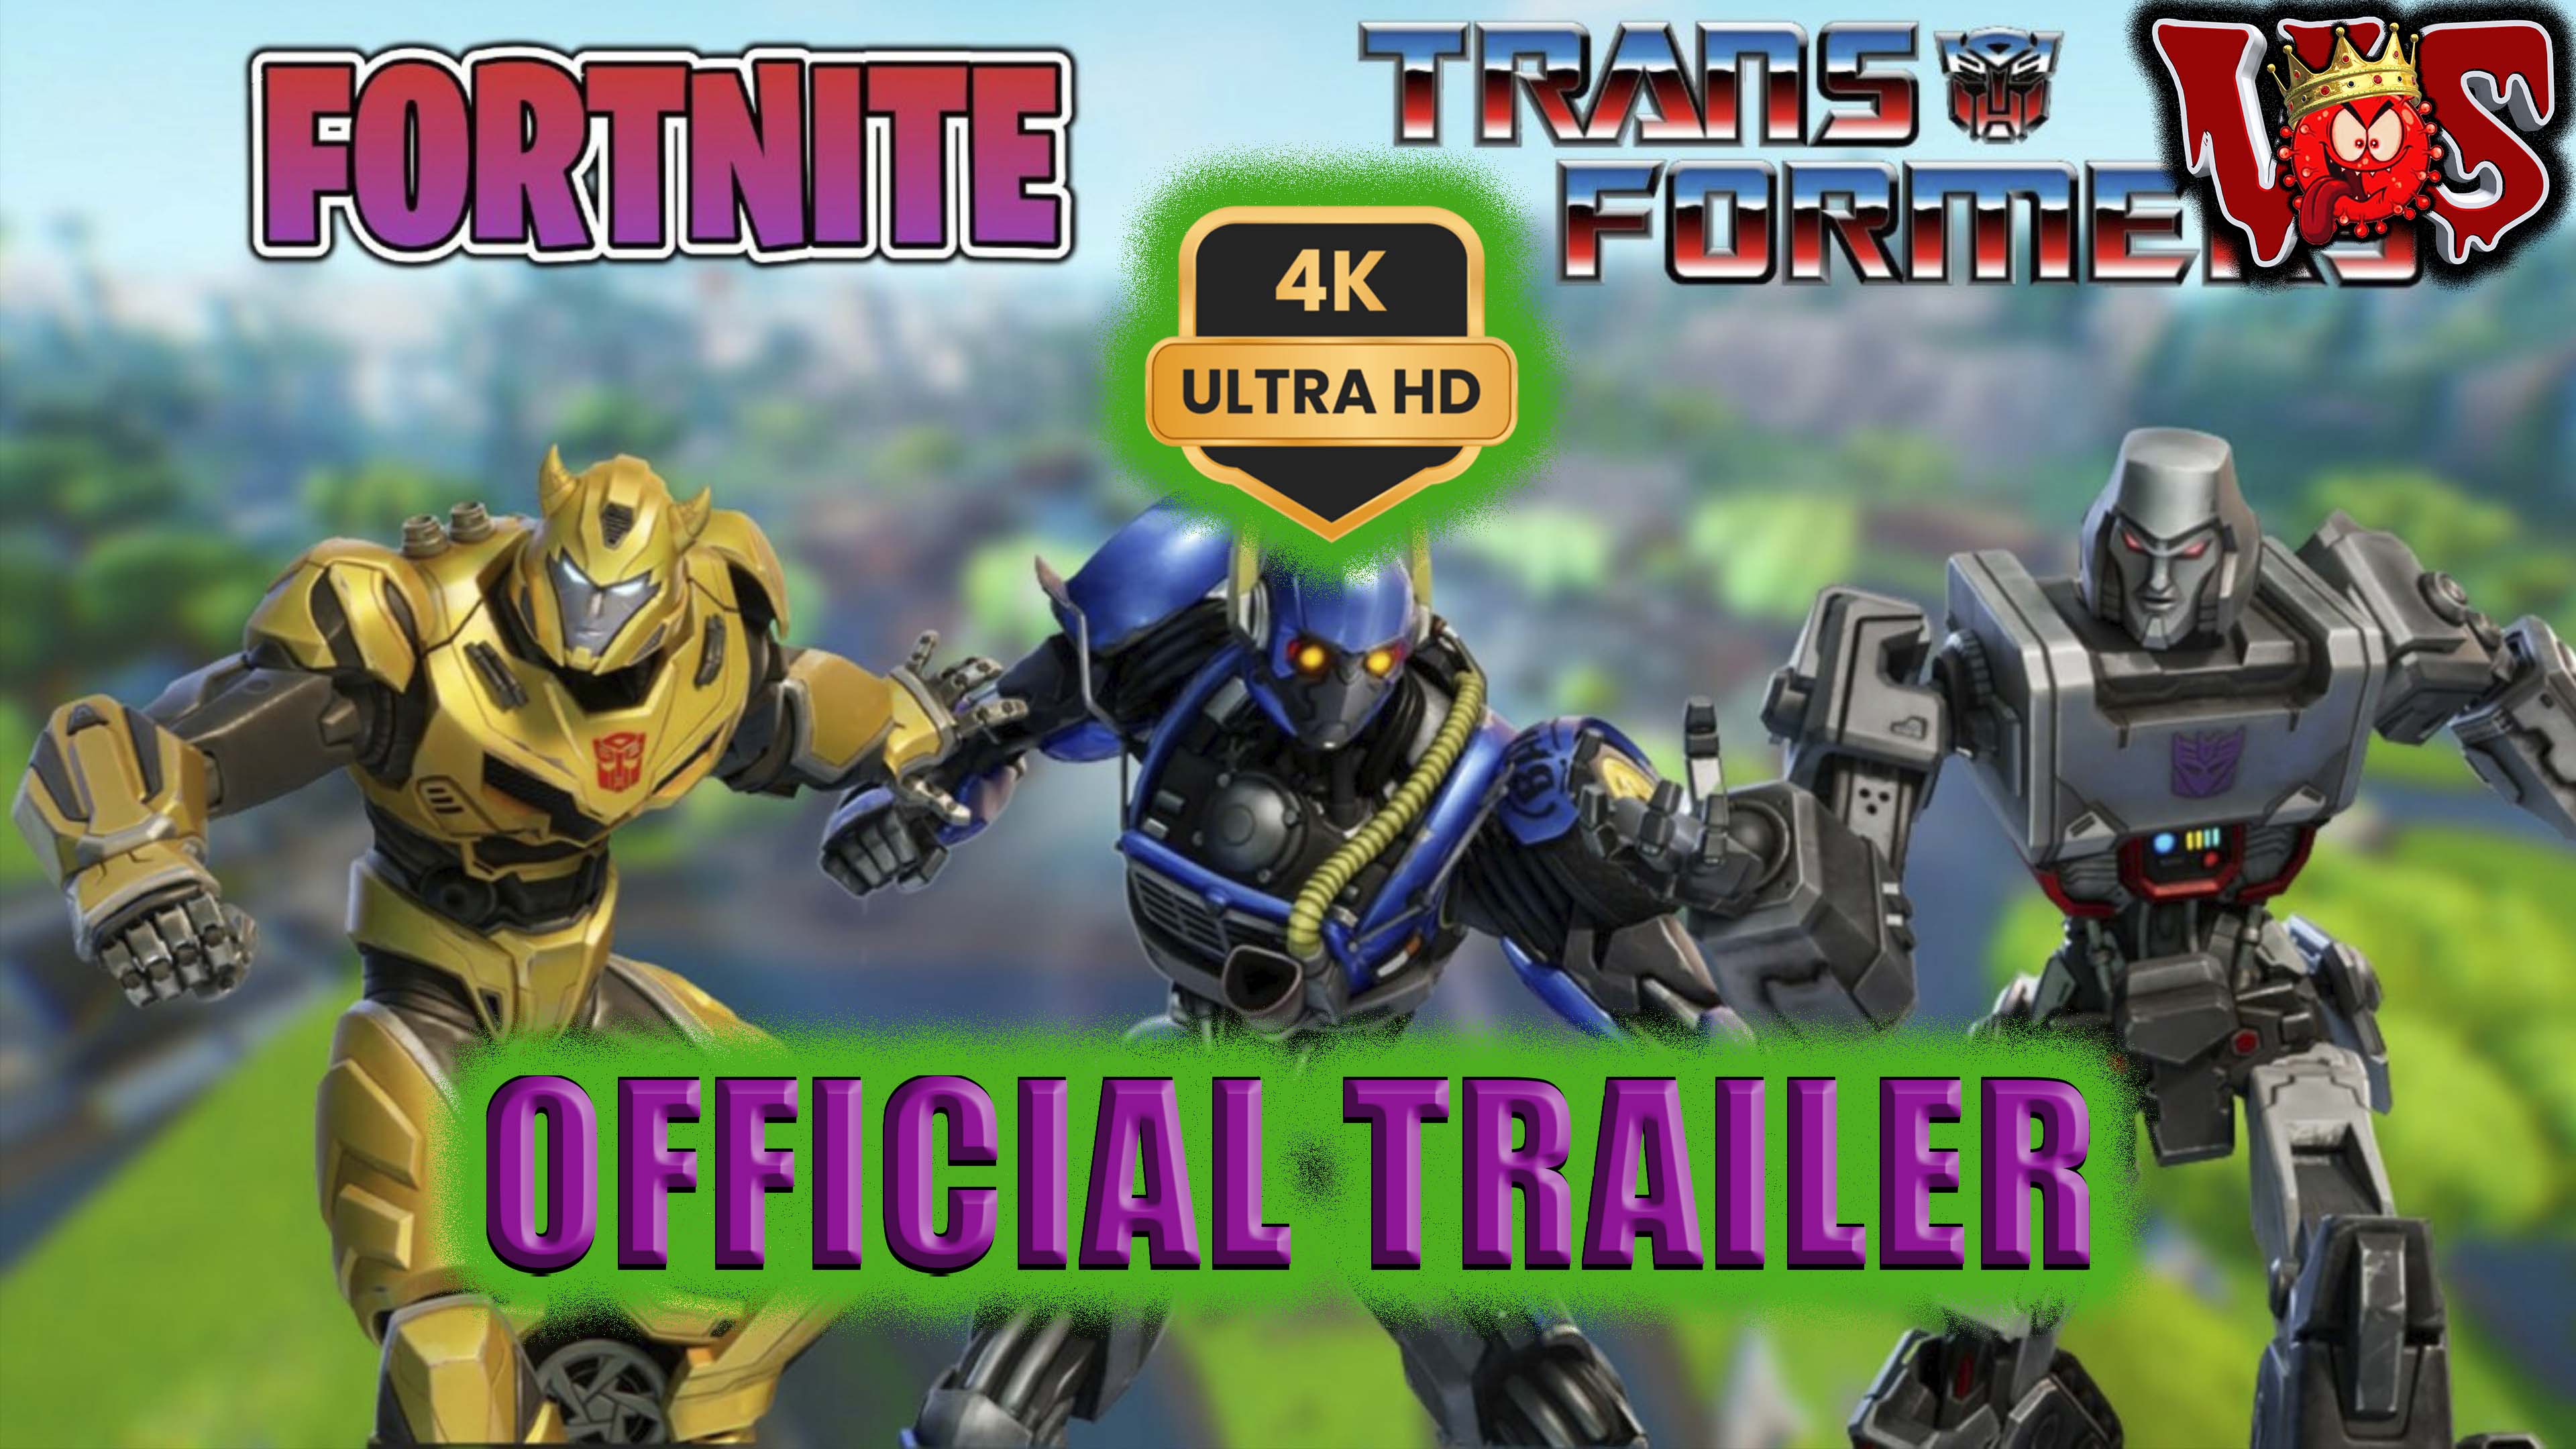 Fortnite Transformers ➤ Официальный трейлер 💥 4K-UHD 💥